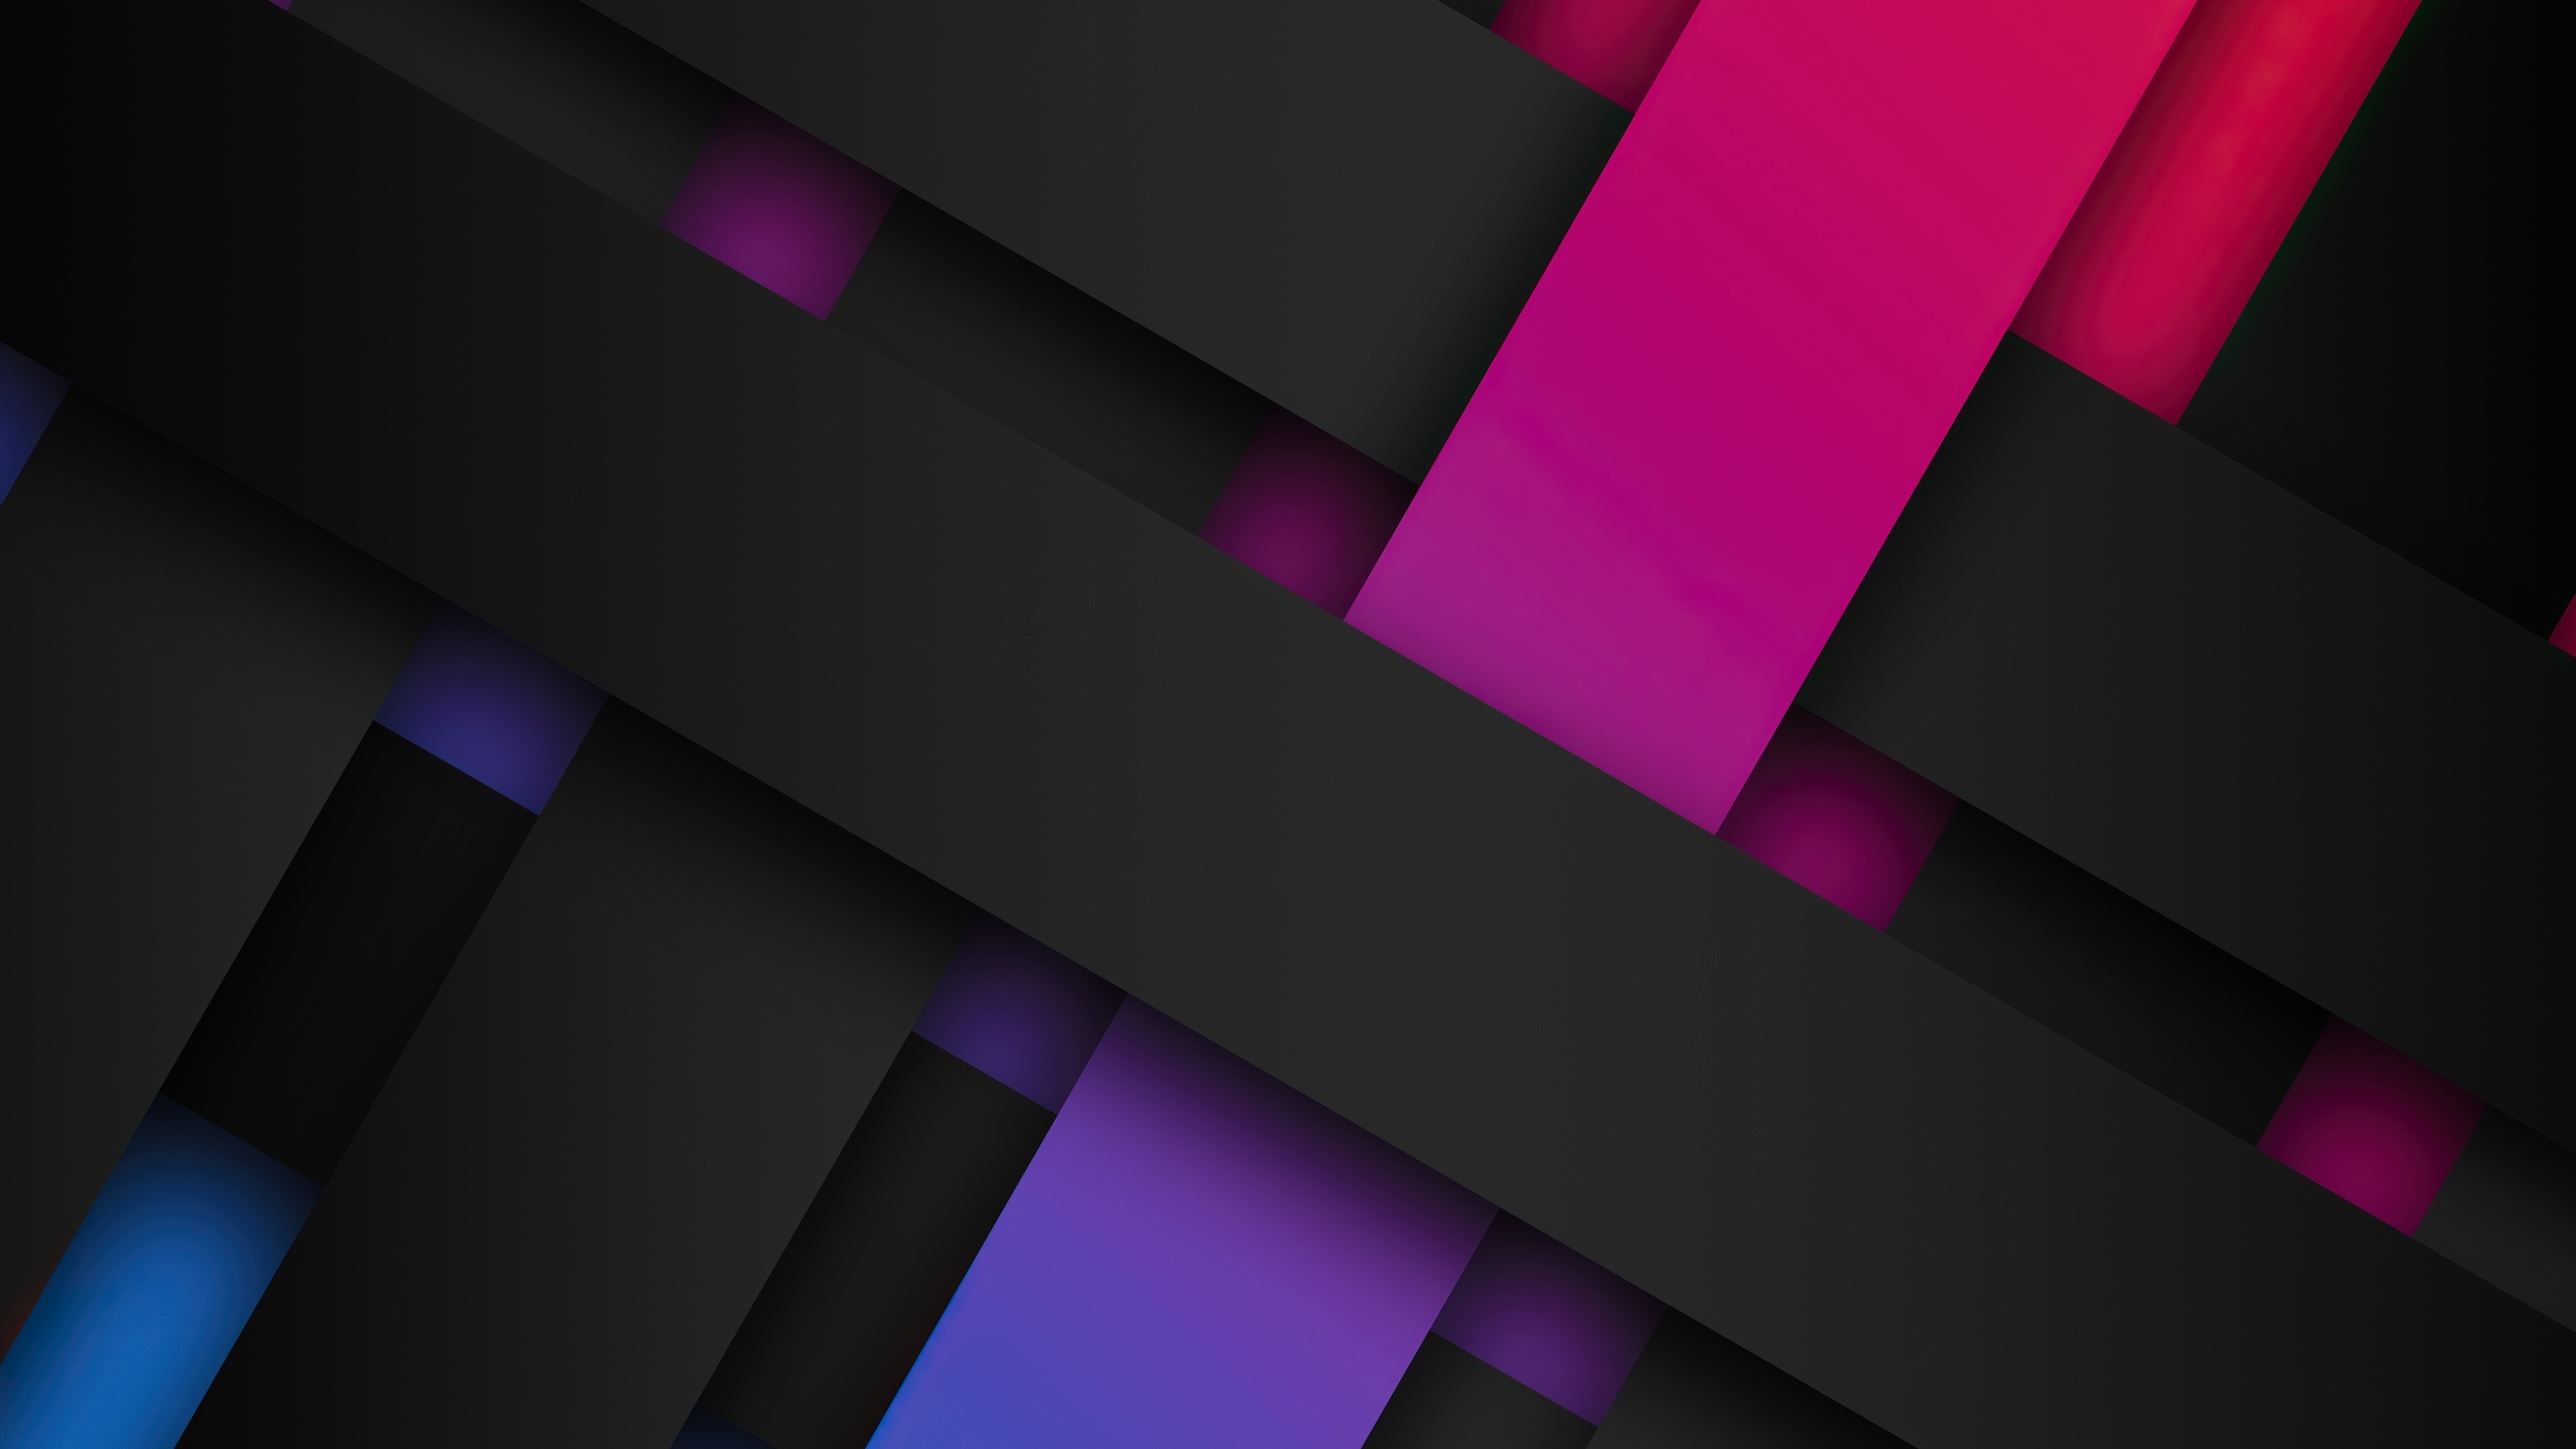 3840x2160 Download dark-pink ribbons, stripes, abstract 4k wallpaper, uhd wallpaper, 16:9 widescreen wallpaper, hd image, background, 26371